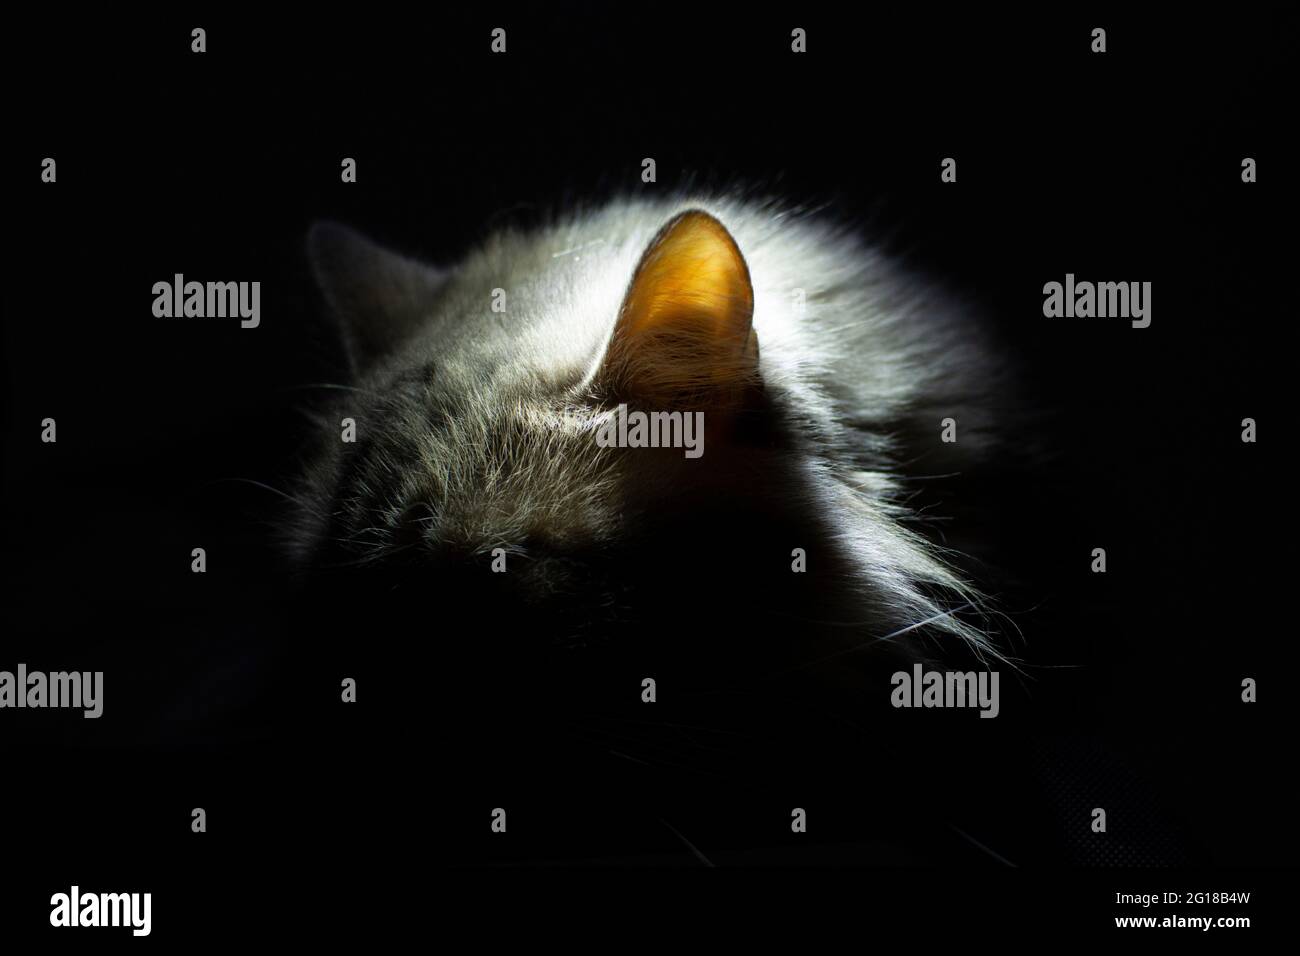 cat ear illuminated in the dark. Cat's hearing concept. Stock Photo